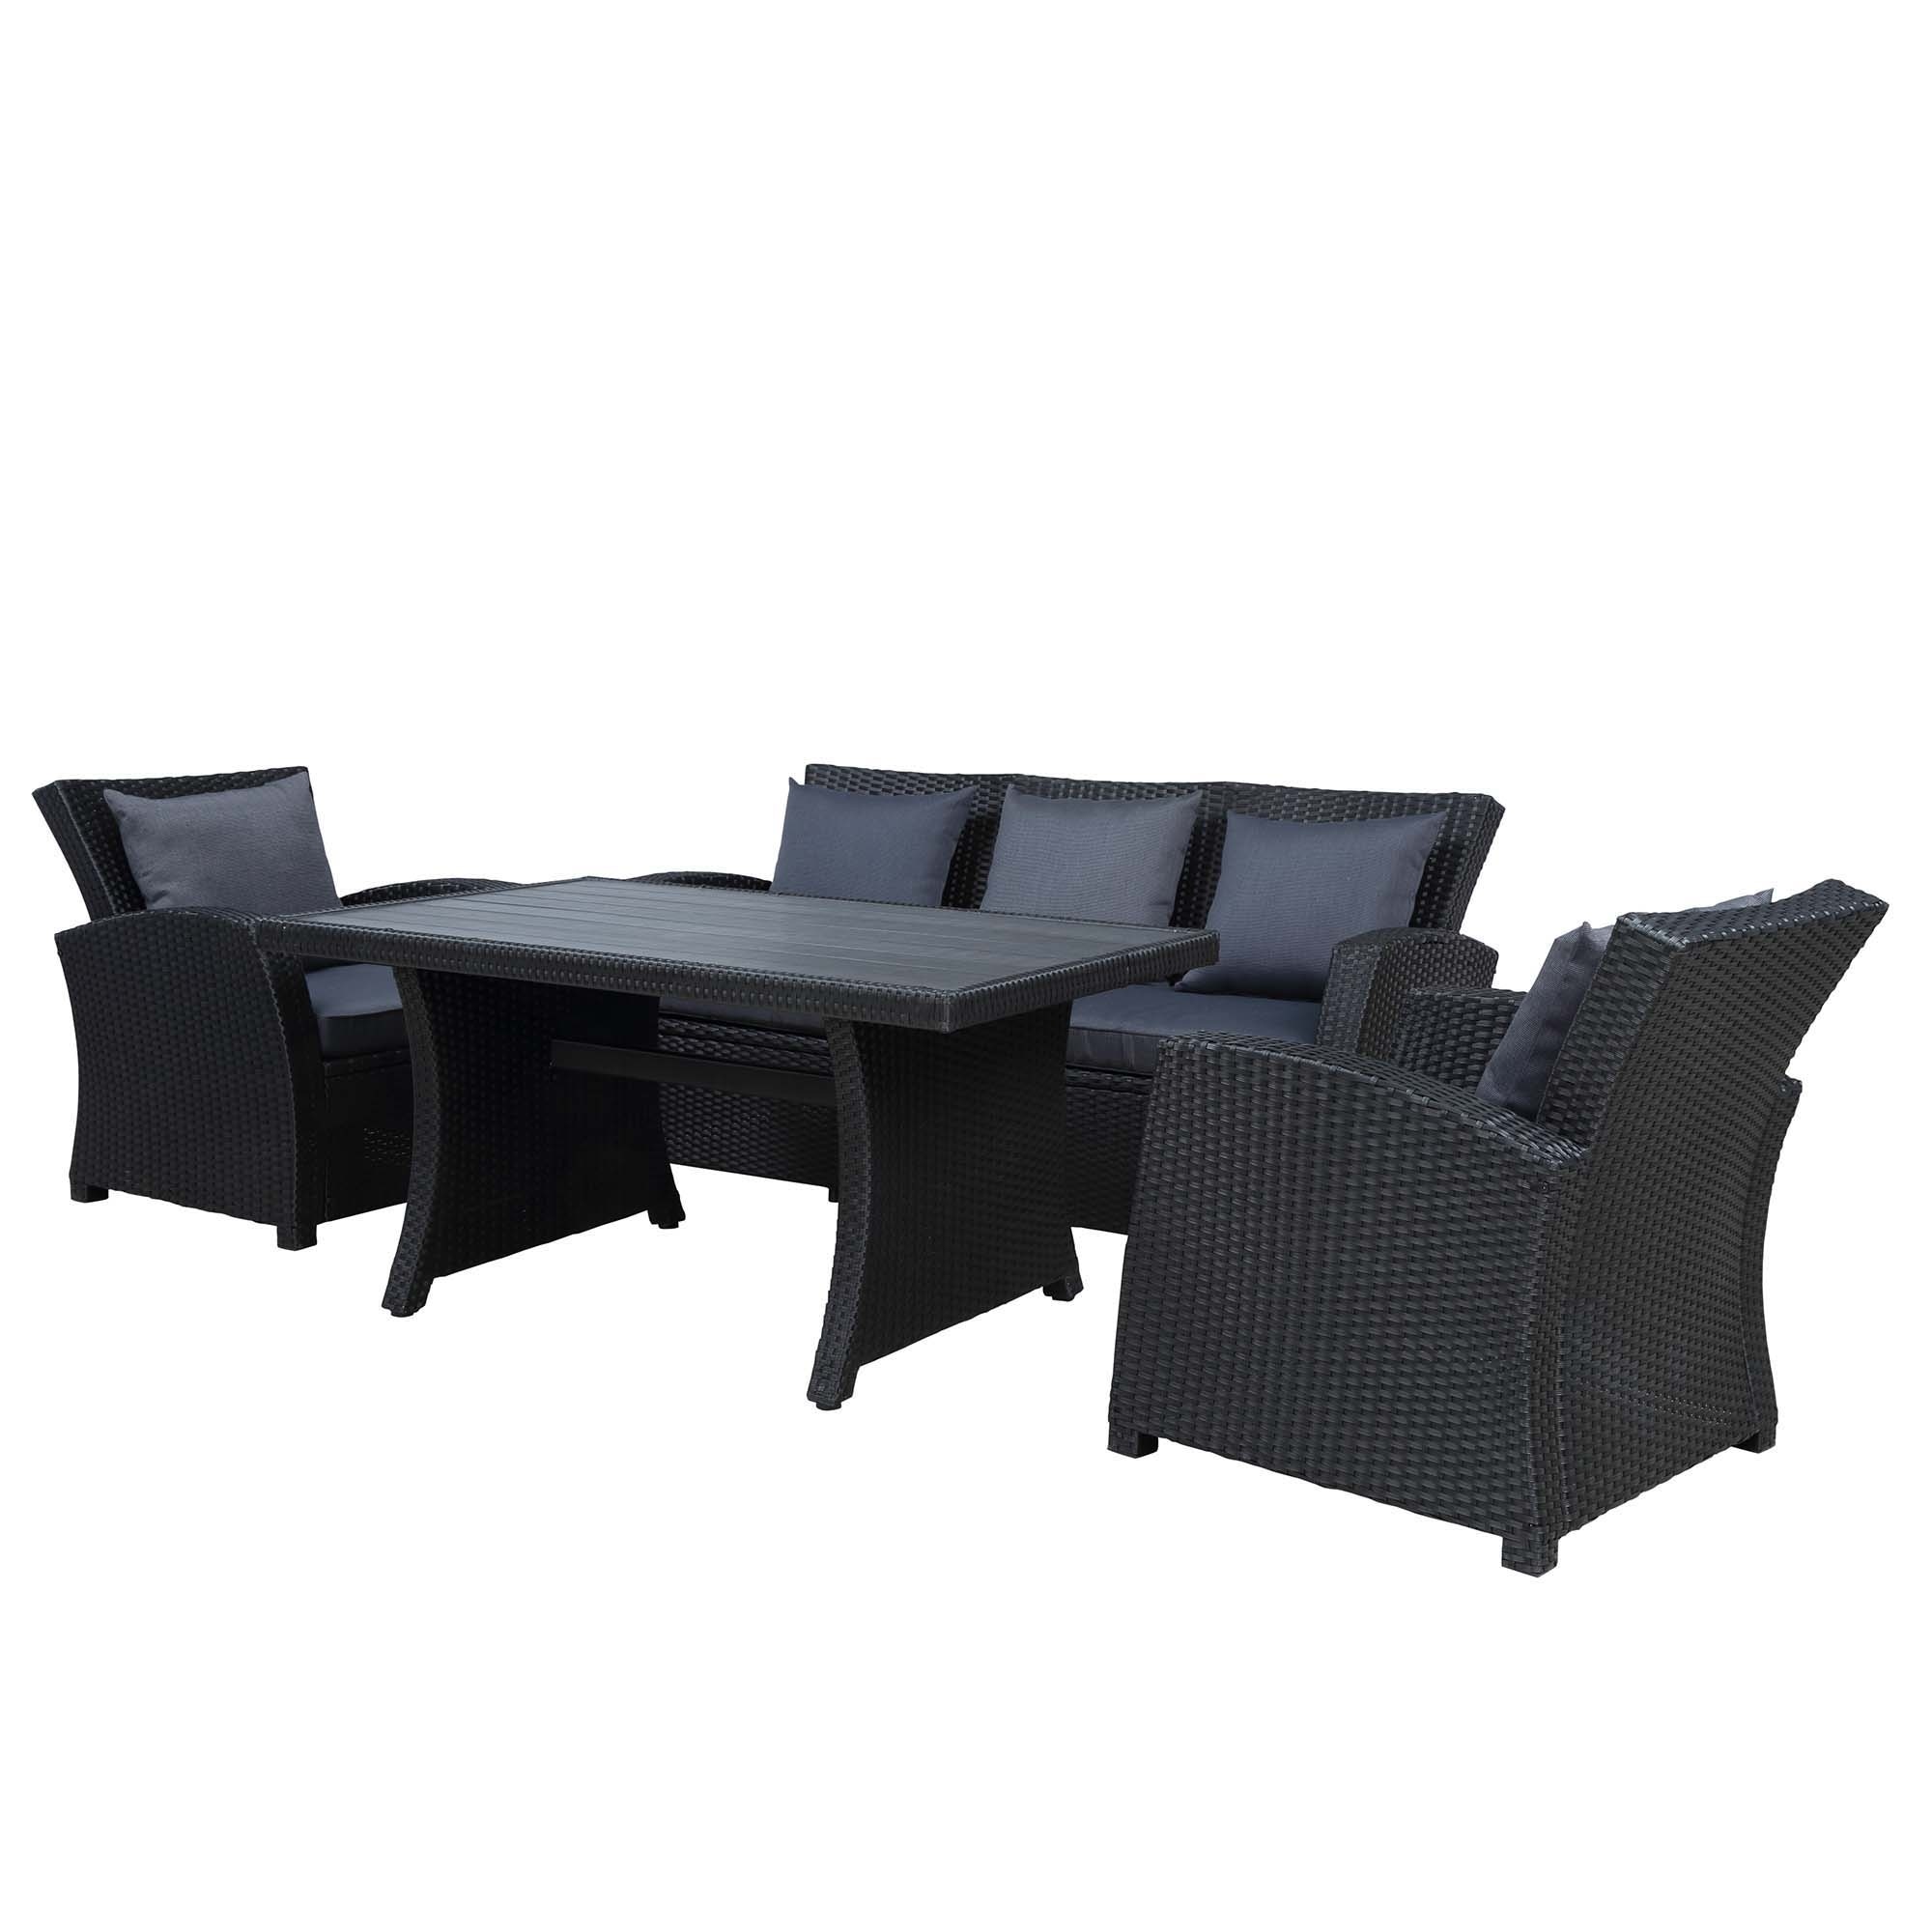 4-piece Conversation Set Black Wicker Furniture Sofa Set